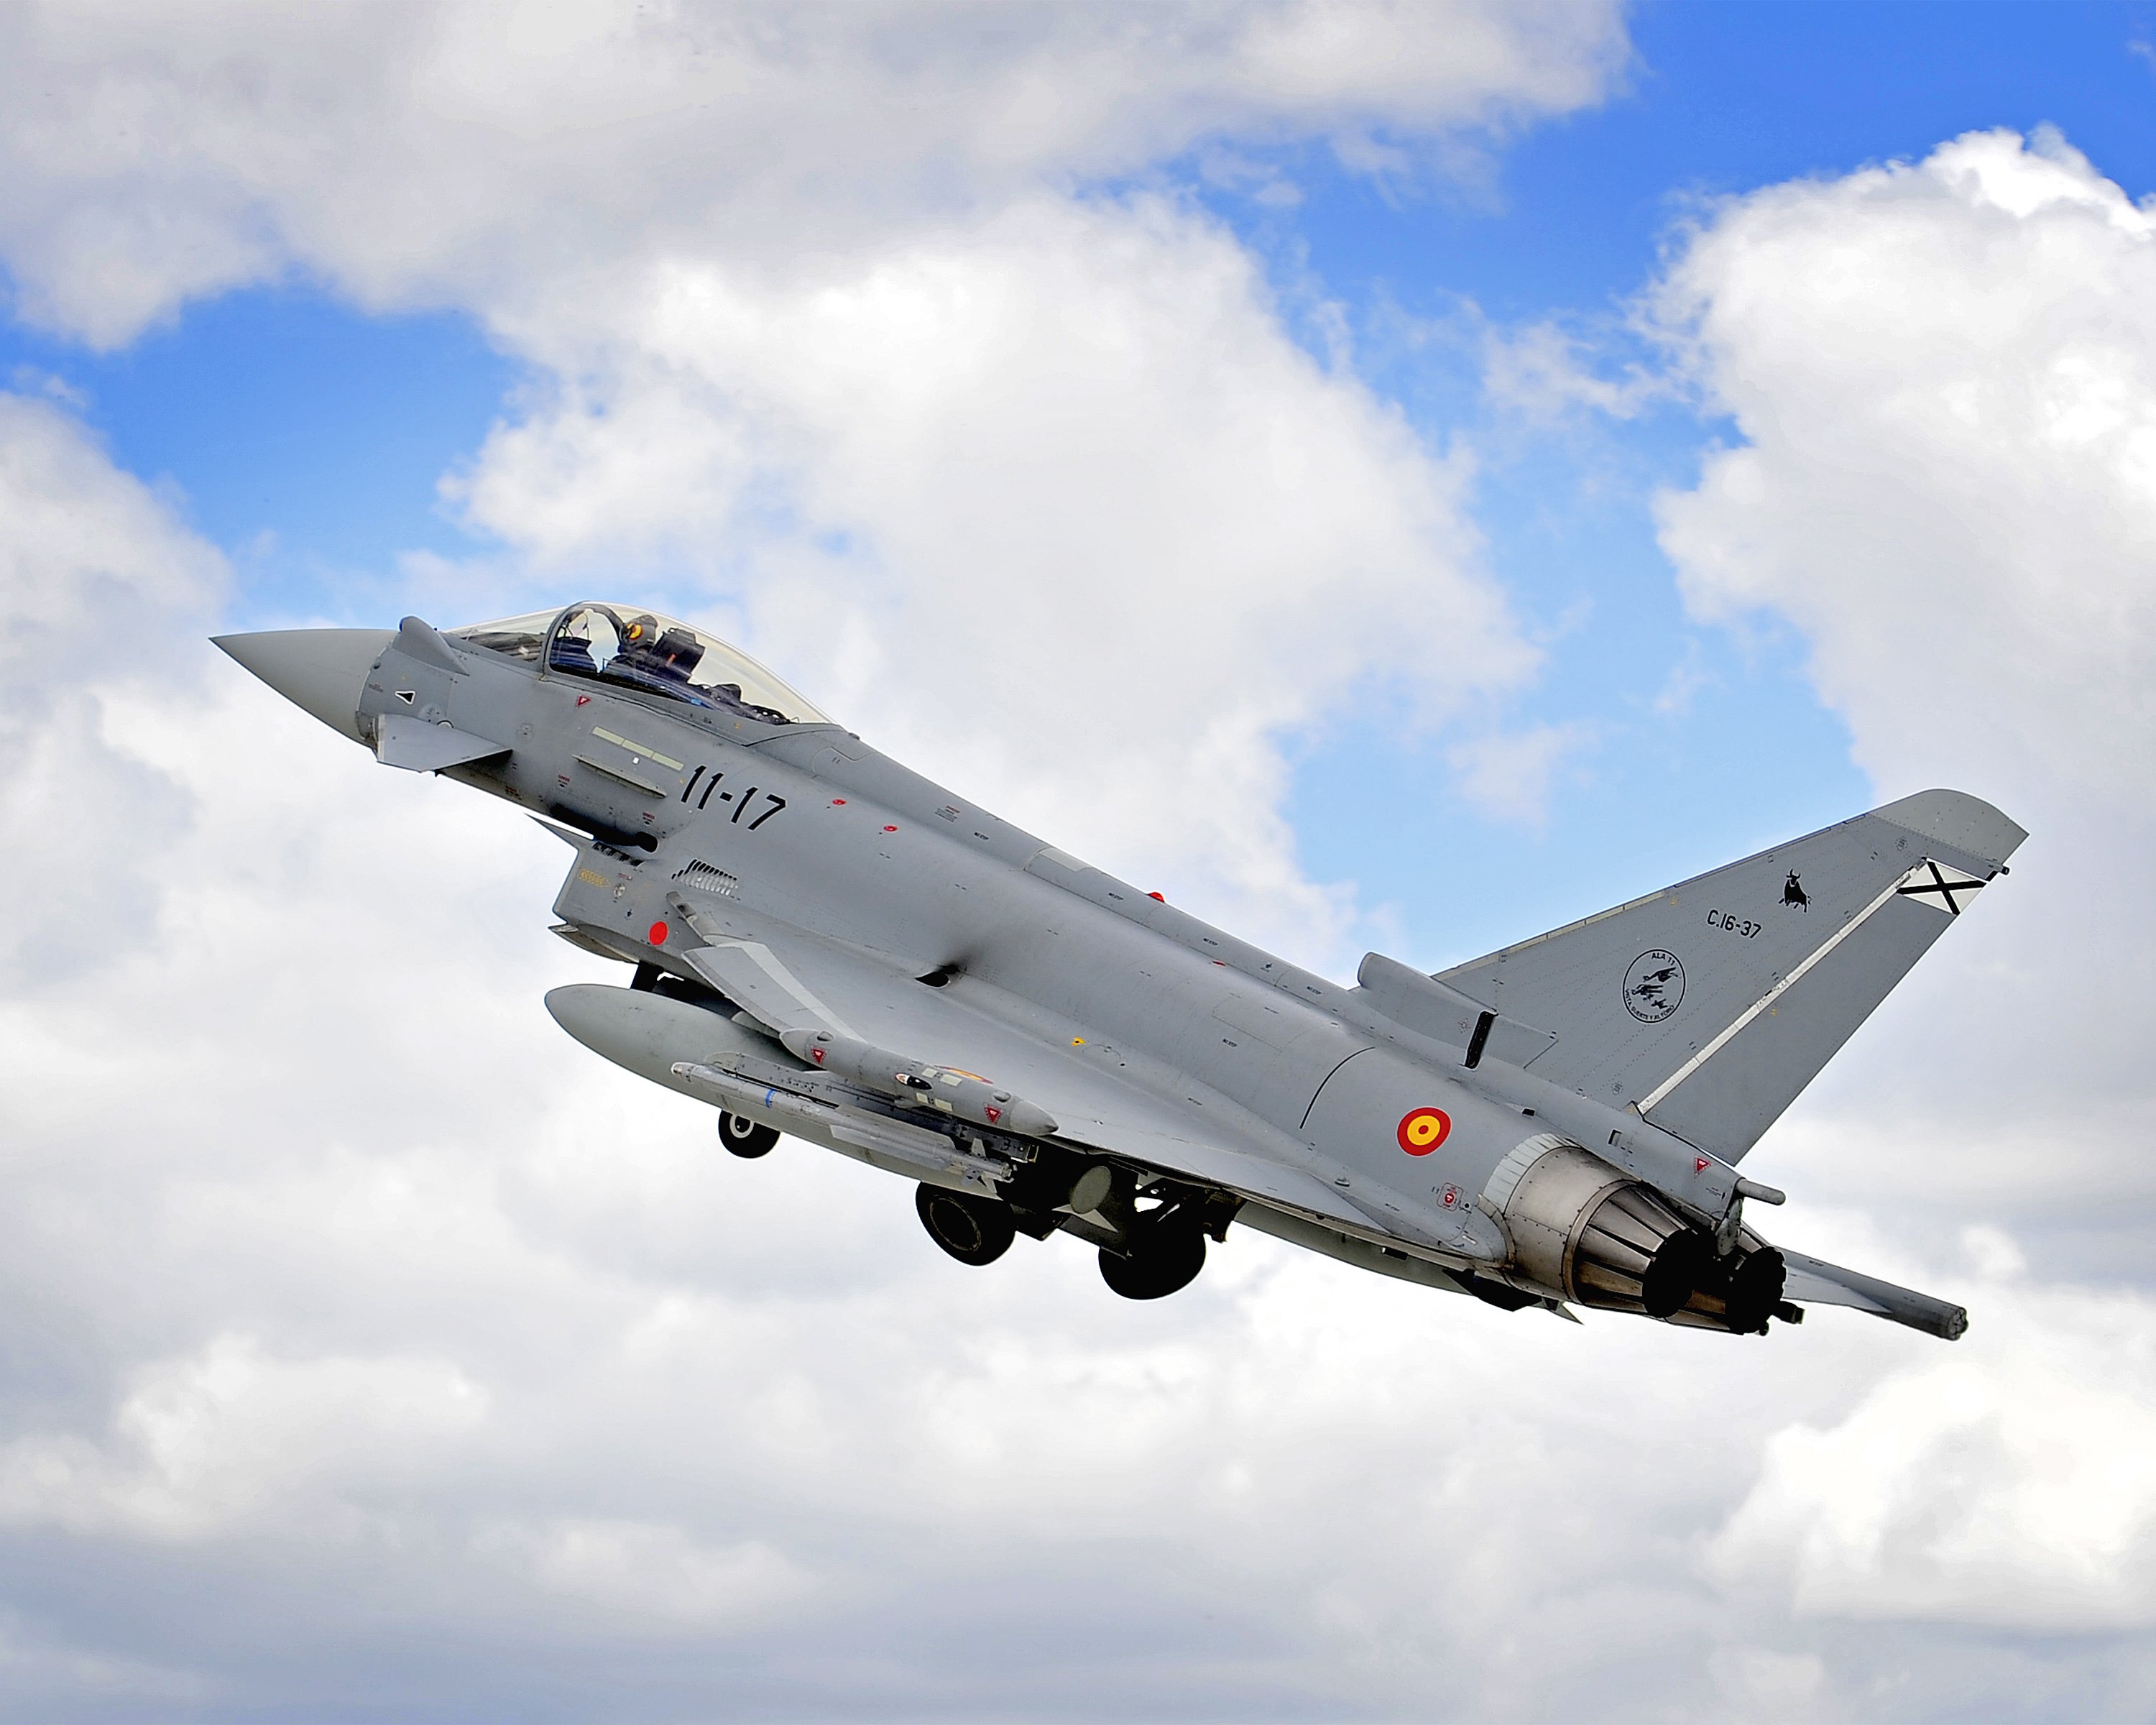 What are Spanish jets doing in Estonia? Margallo knows